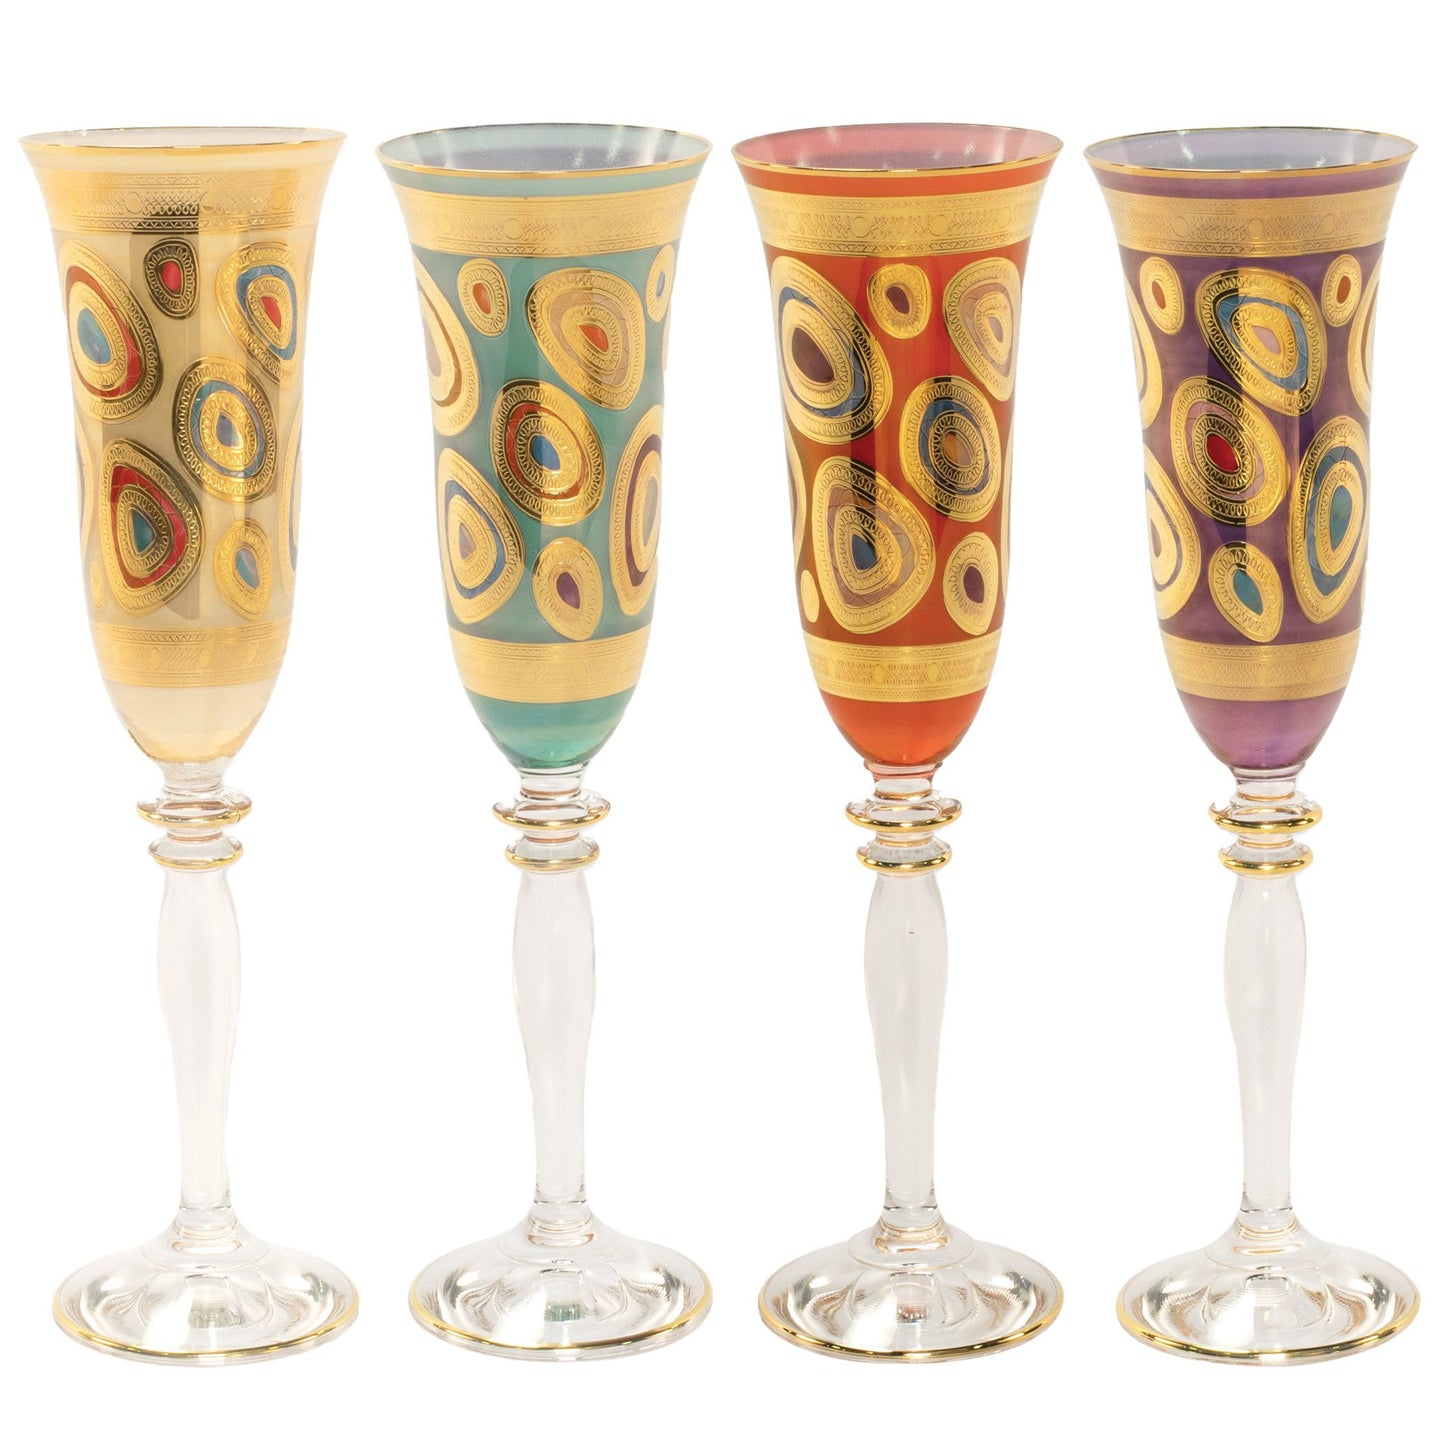 Vietri Regalia Assorted Champagne Glasses, Set of 4, 9.75"H, 6oz Glassware